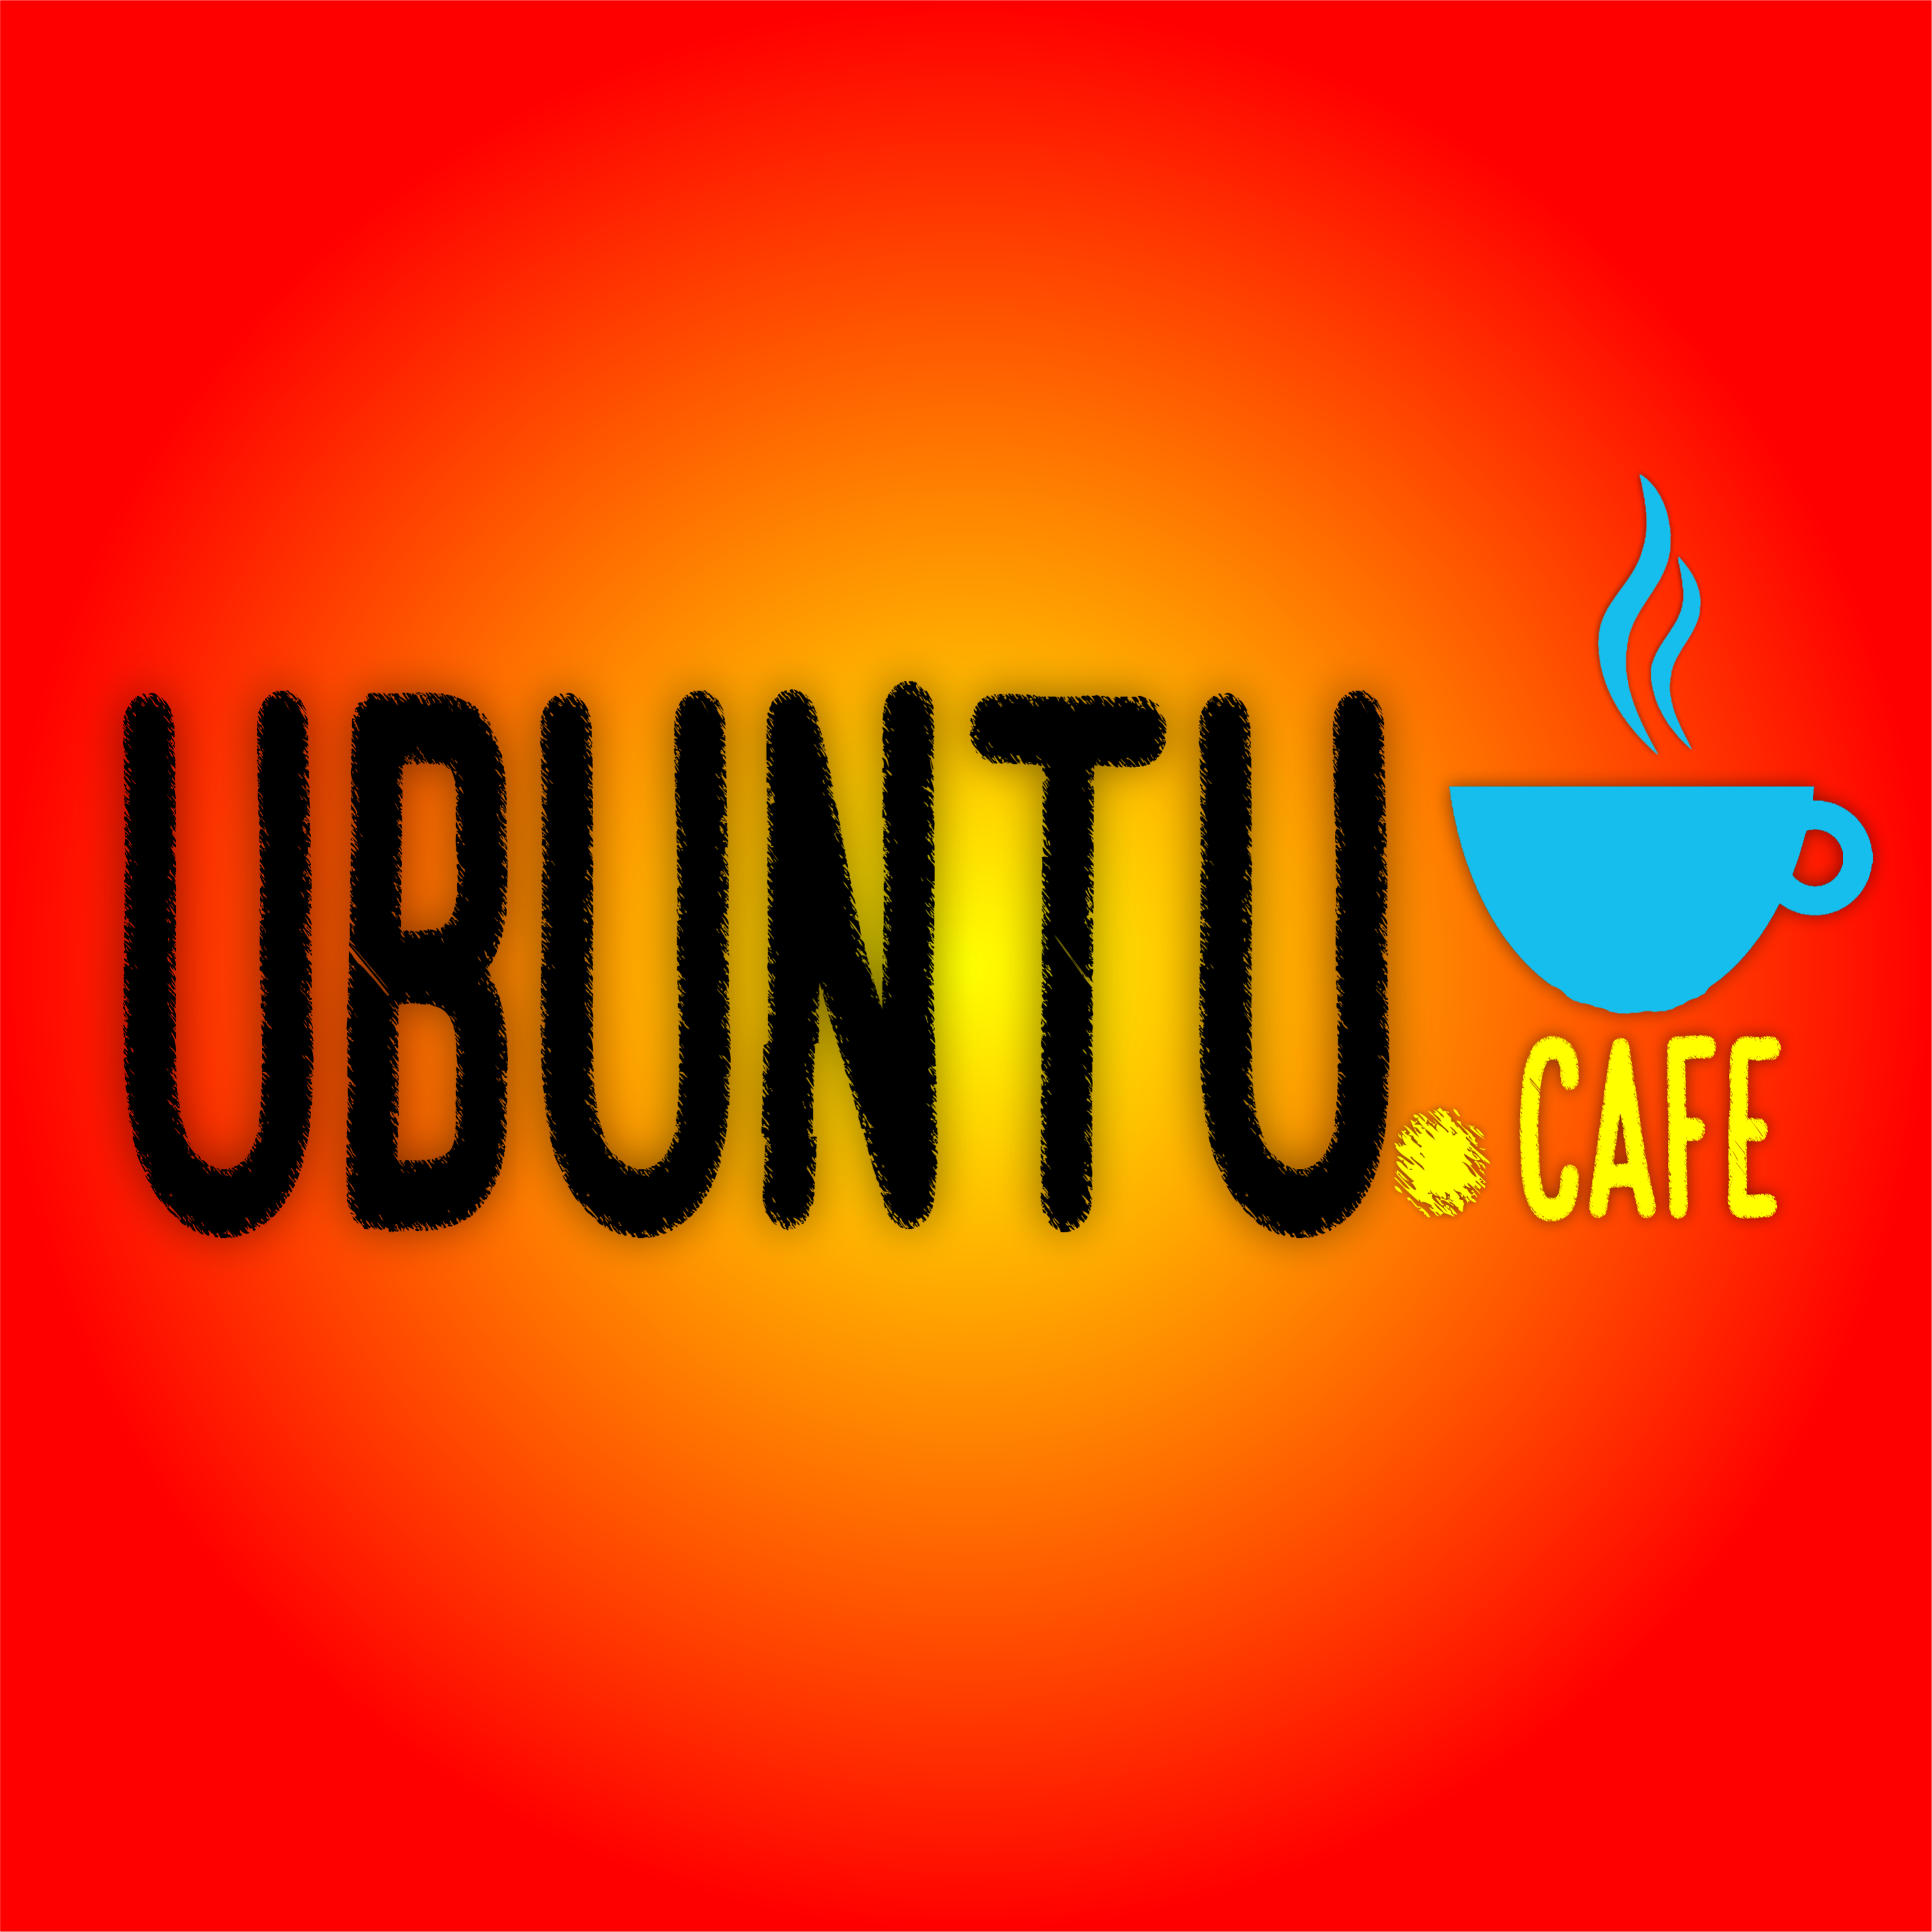 Ubuntu Cafe T2 C16: Merengue de los 80s Mezclado Volumen II